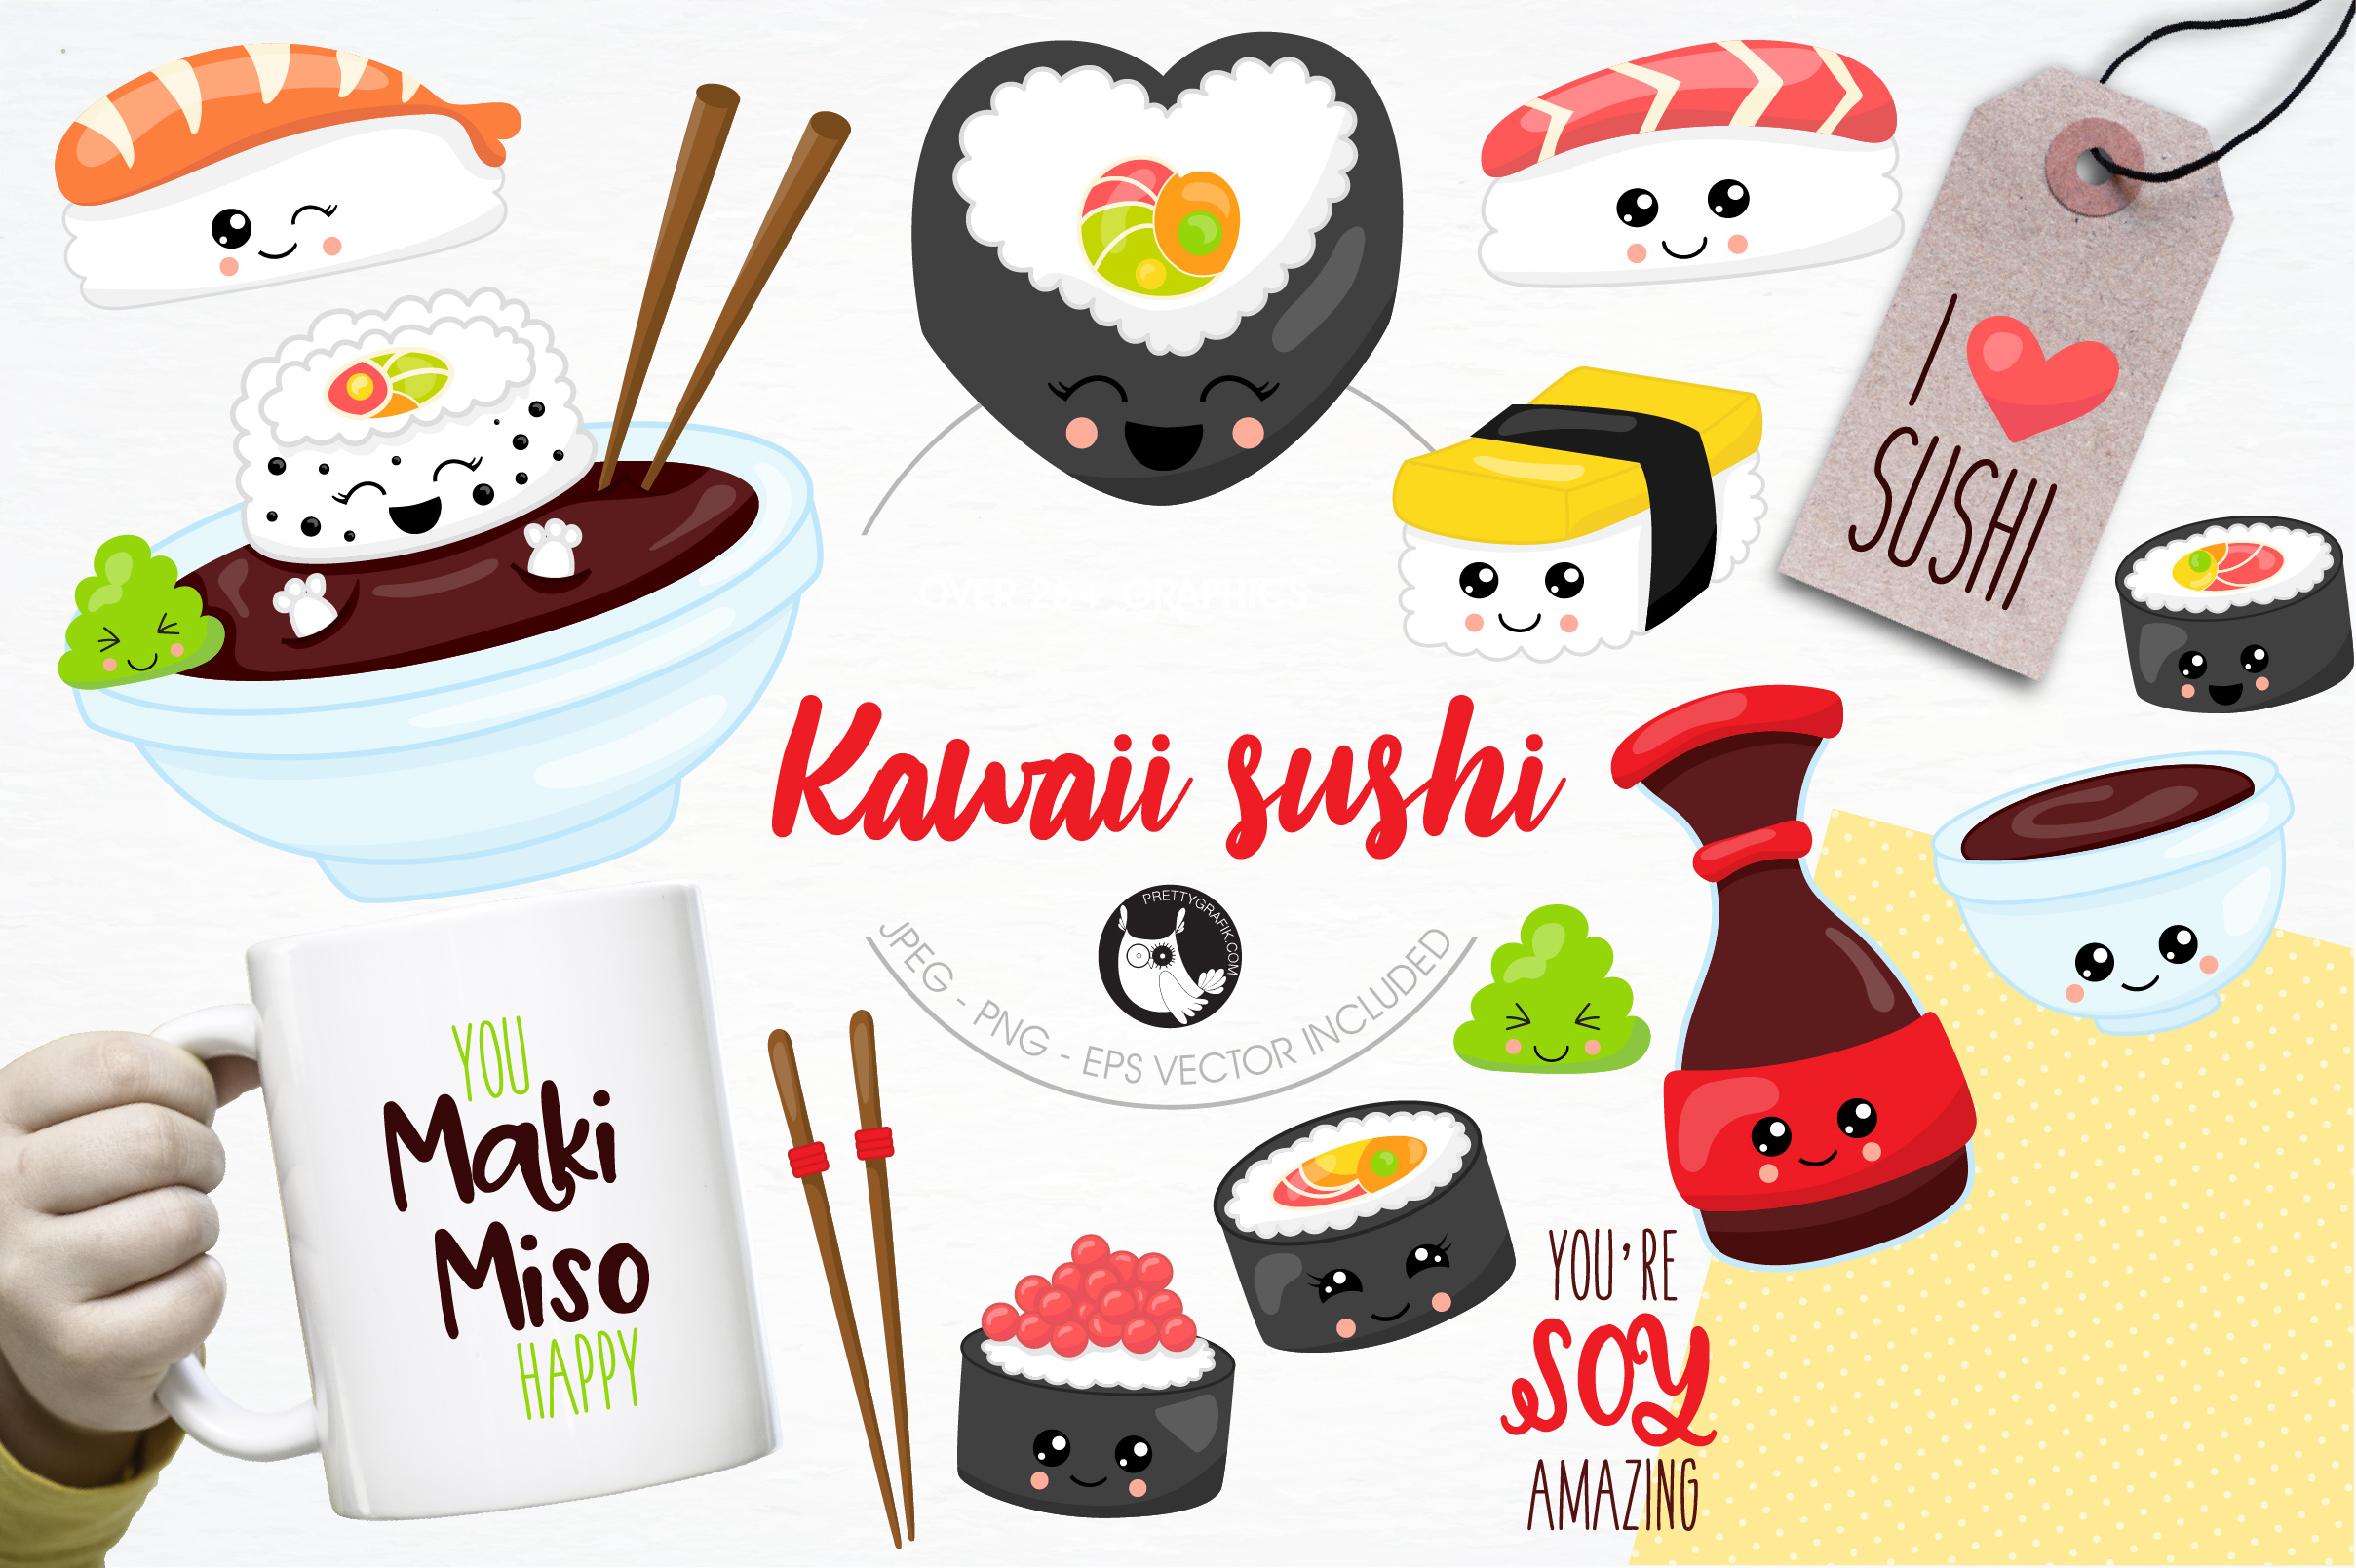 Kawaii sushi graphics and illustrations (23175) | Illustrations ...